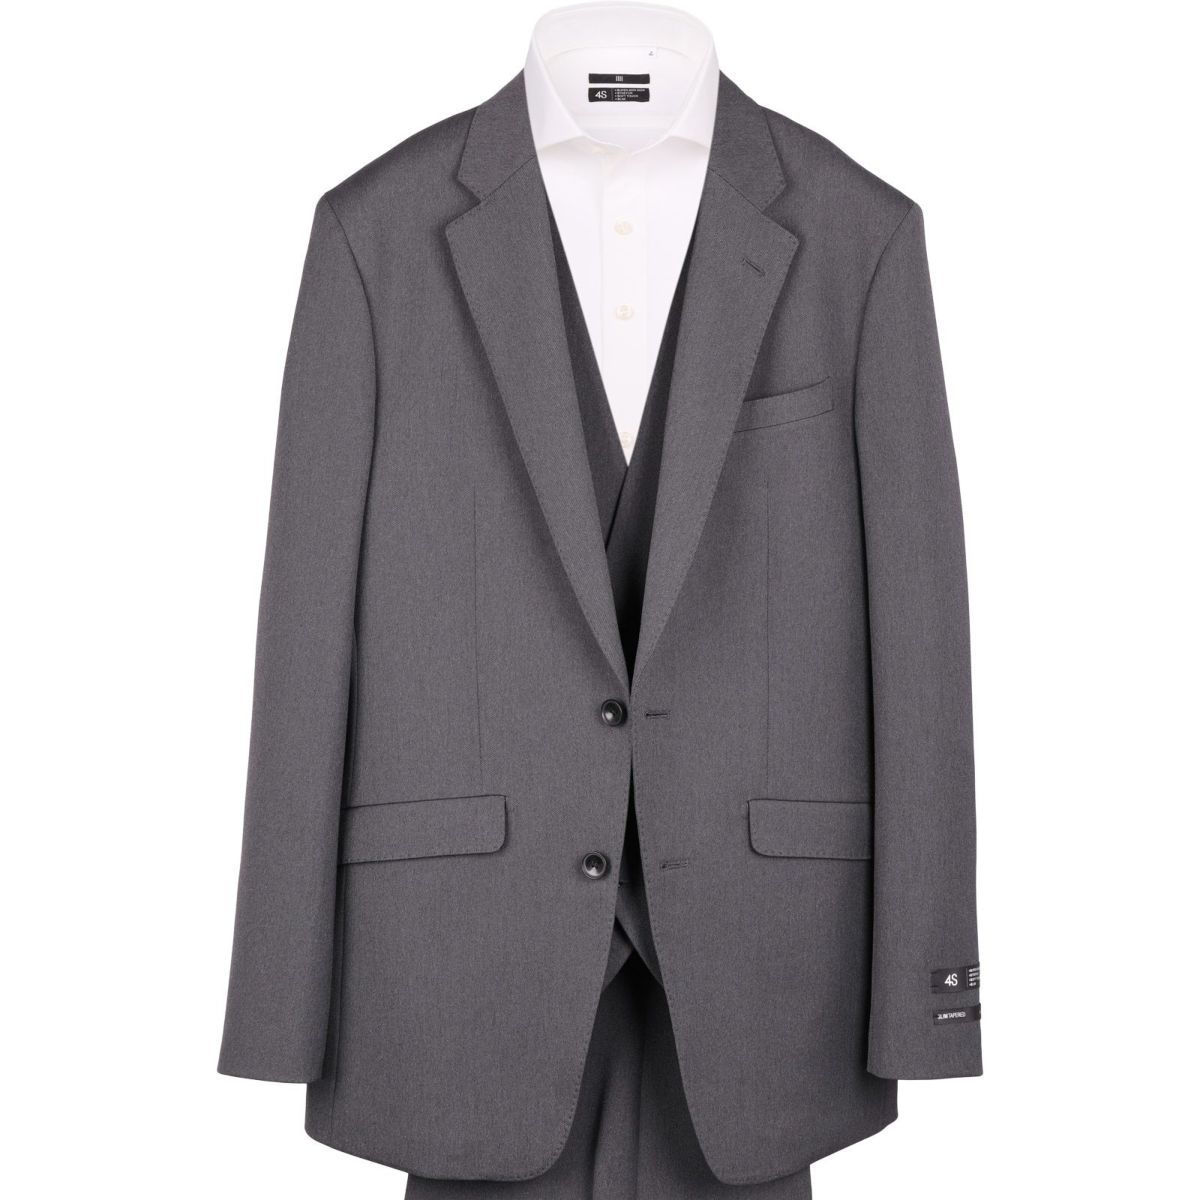 SUIT SELECT スーツ スーツセレクト スリーピース - スーツ